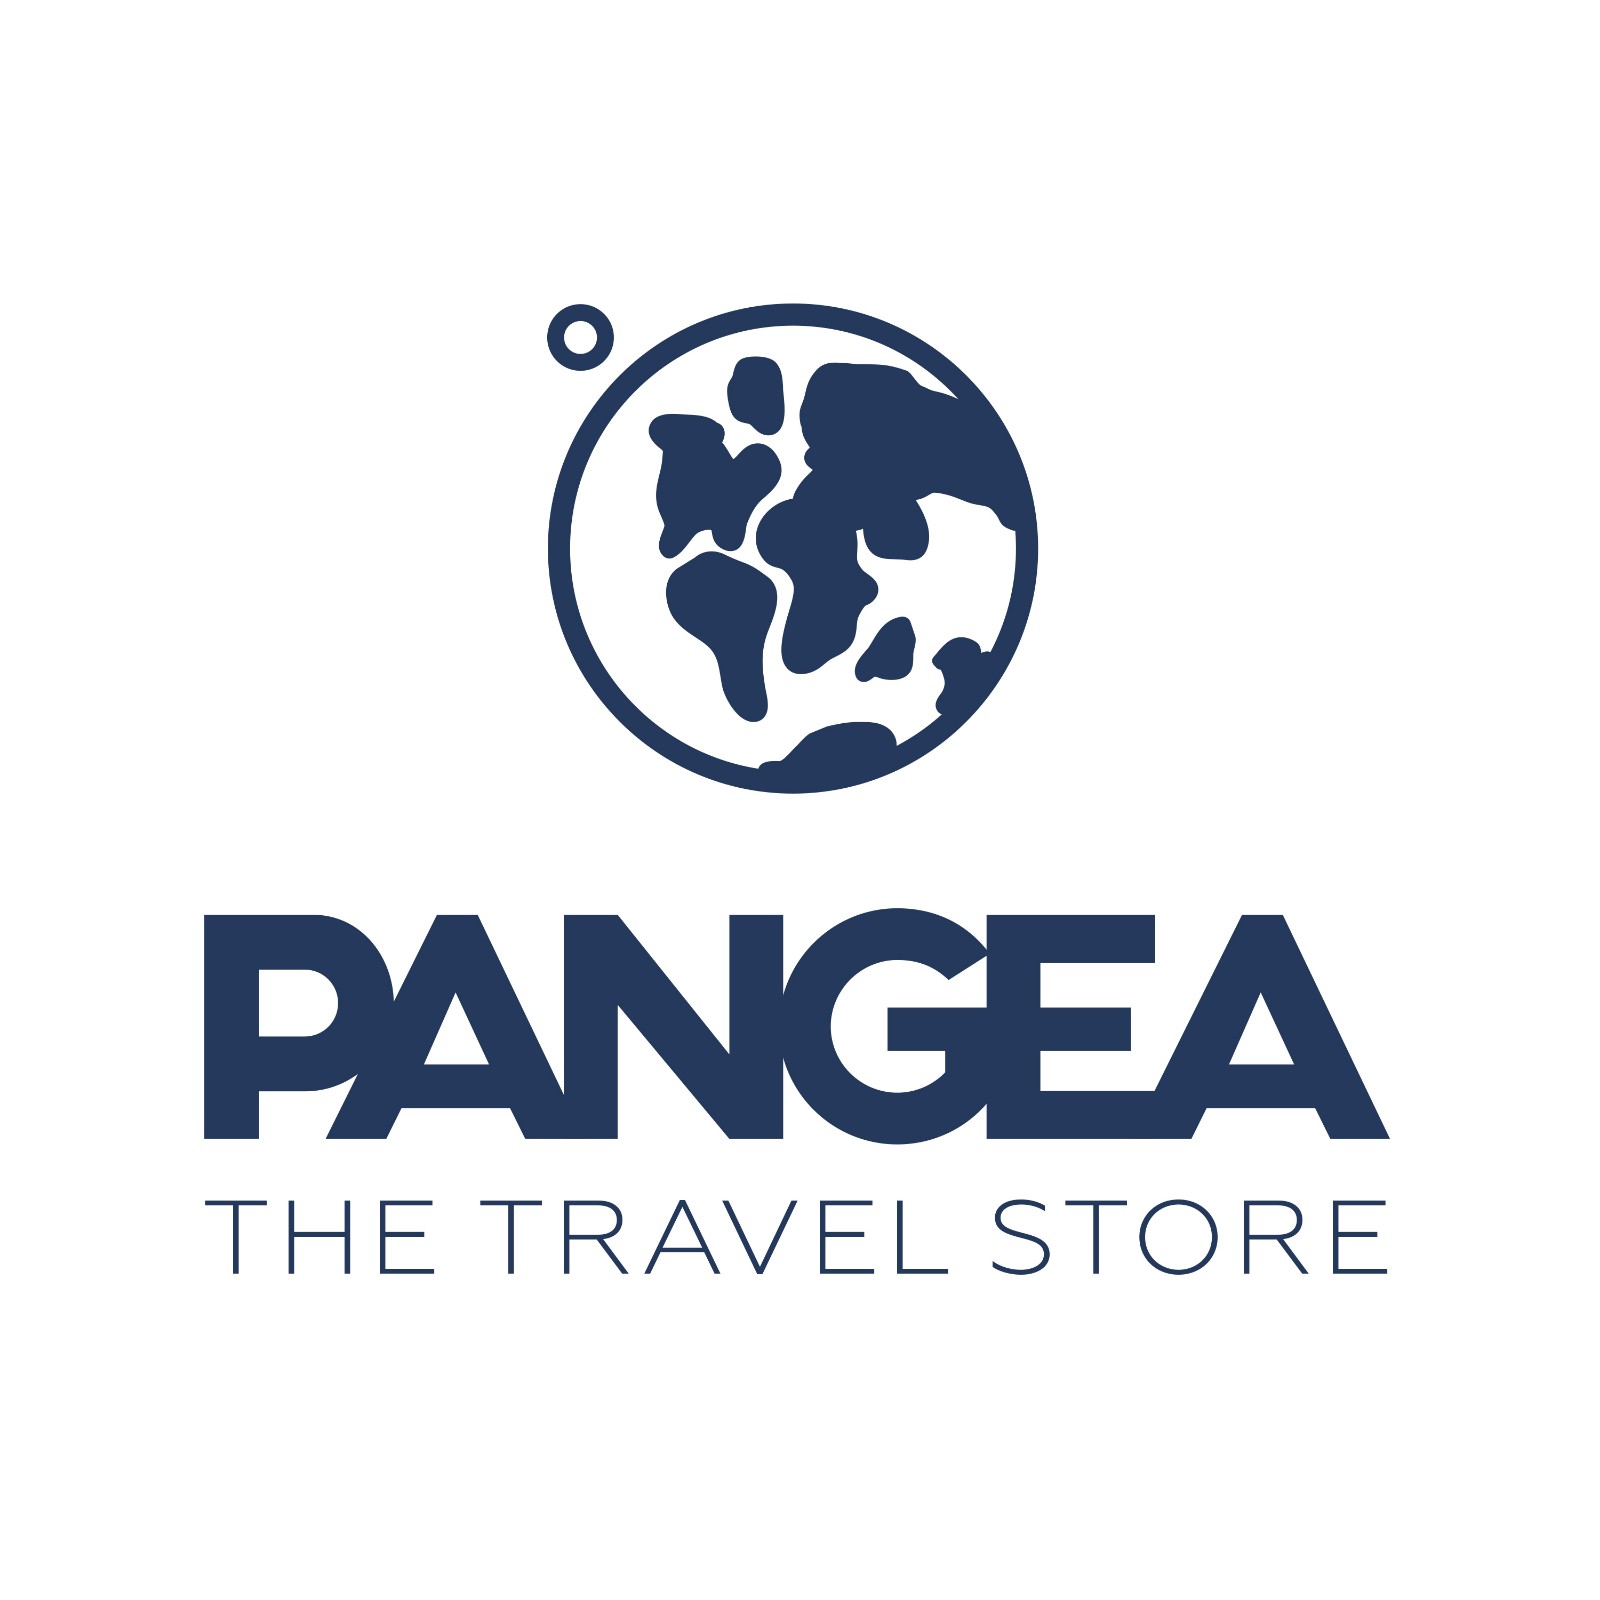 PANGEA, The Travel Store